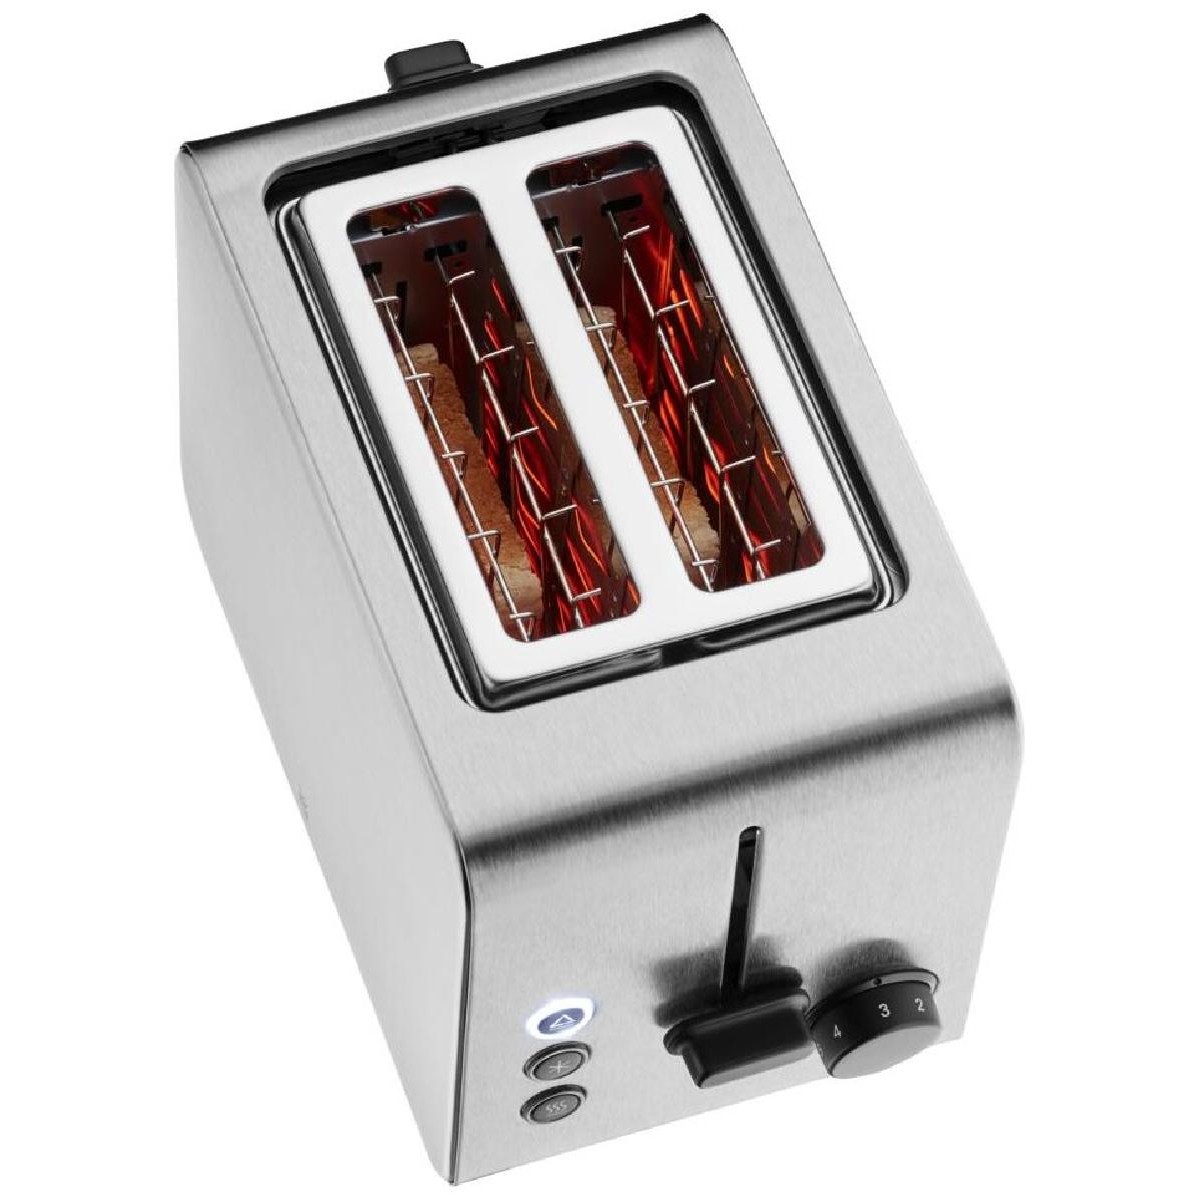 WMF Stelio Toaster Edition 1050 watt inox